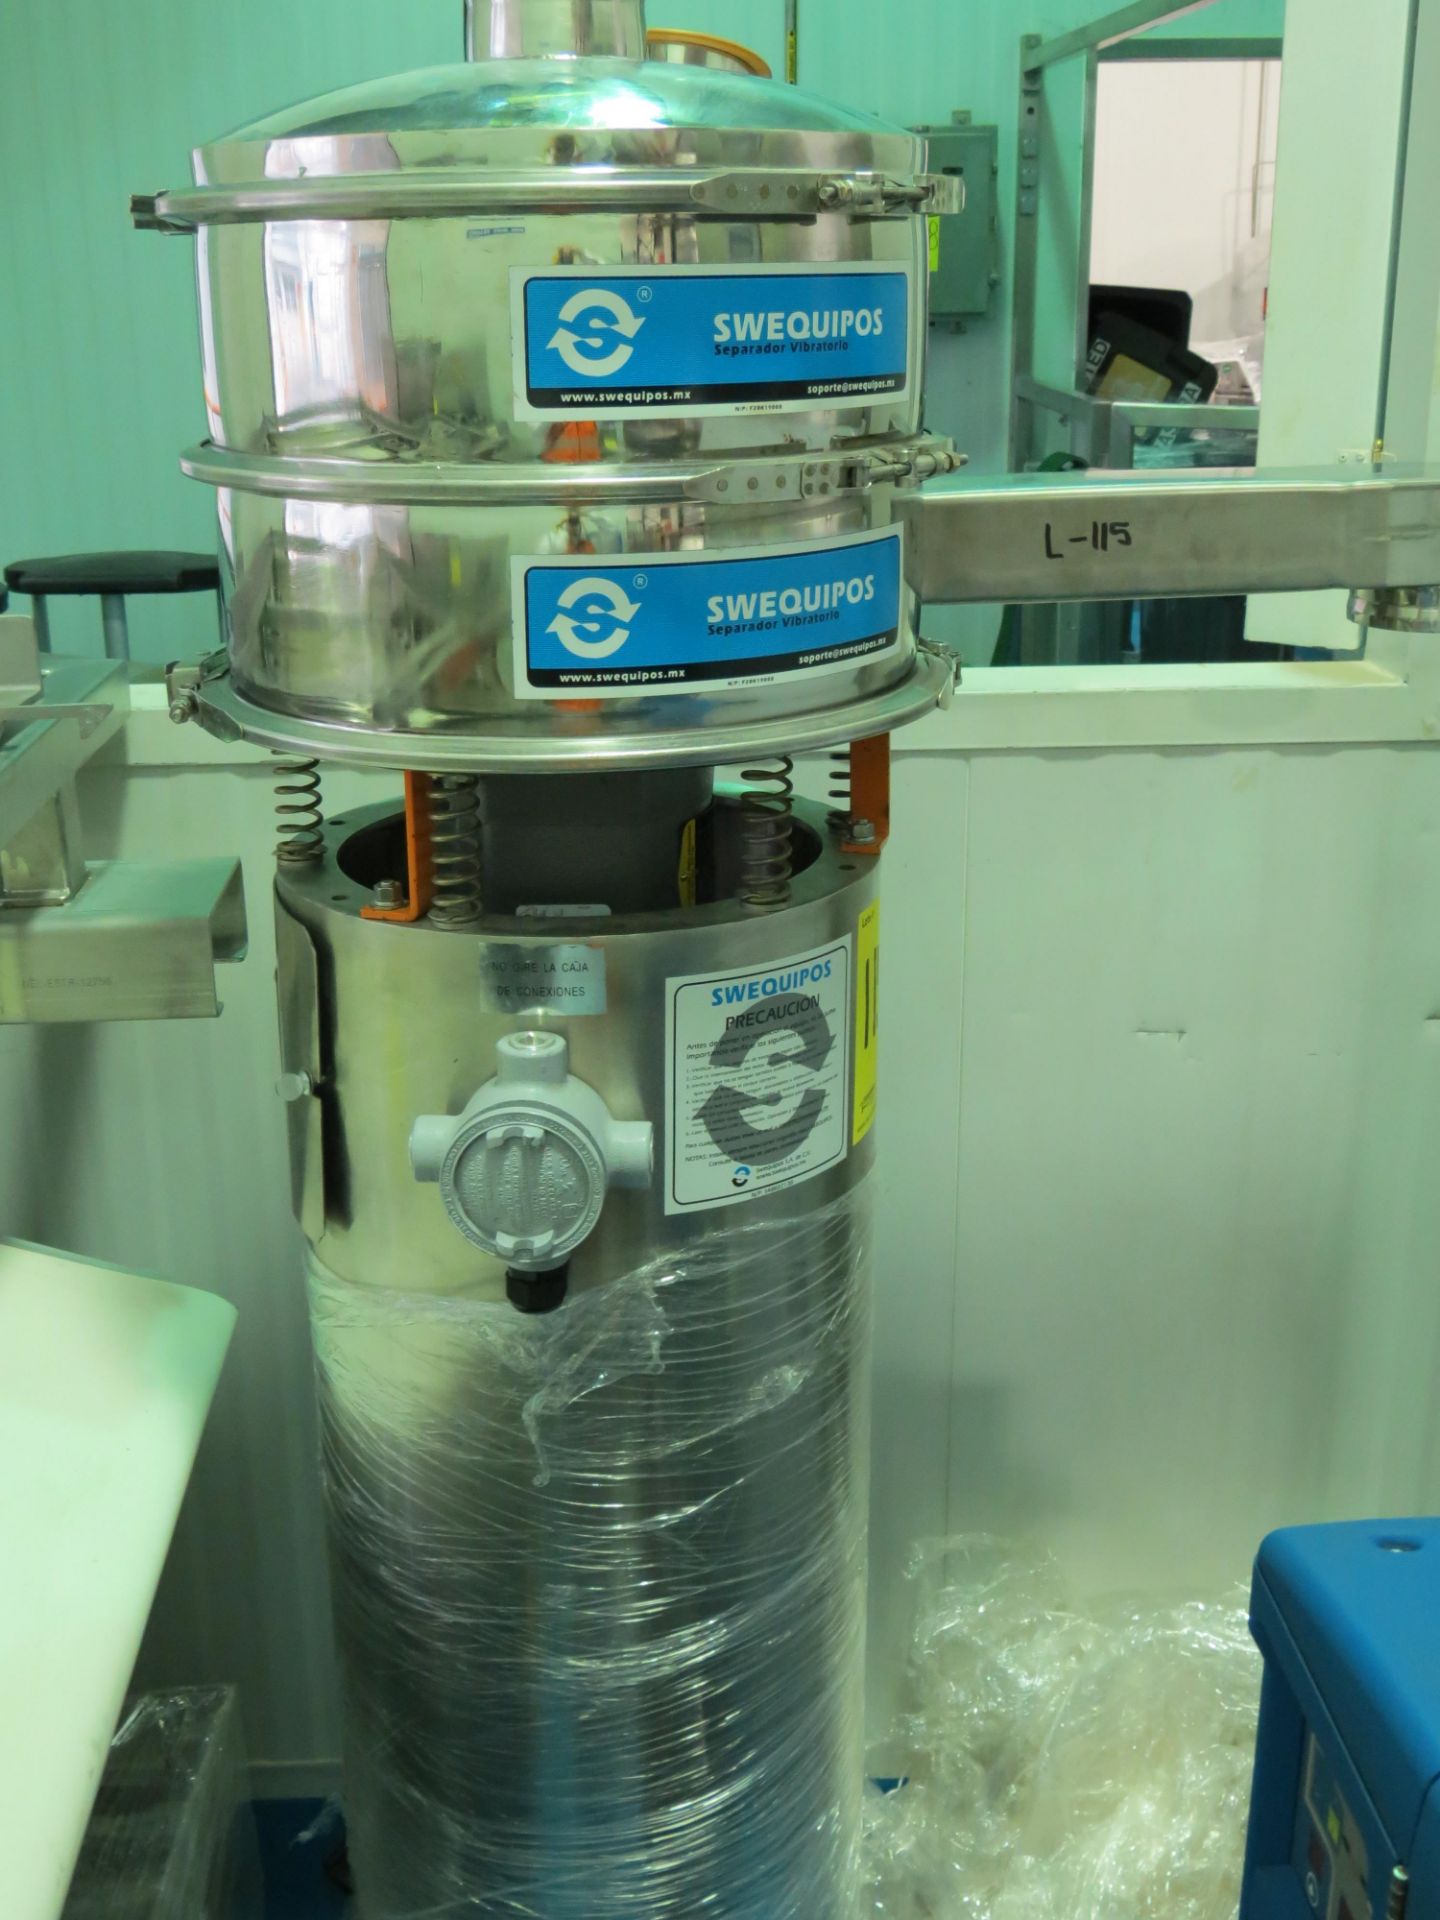 Swequipos Vibratory Screener / Separator, ,with Baldor motor of 2.5 HP, 1140 RPM. - Image 2 of 6